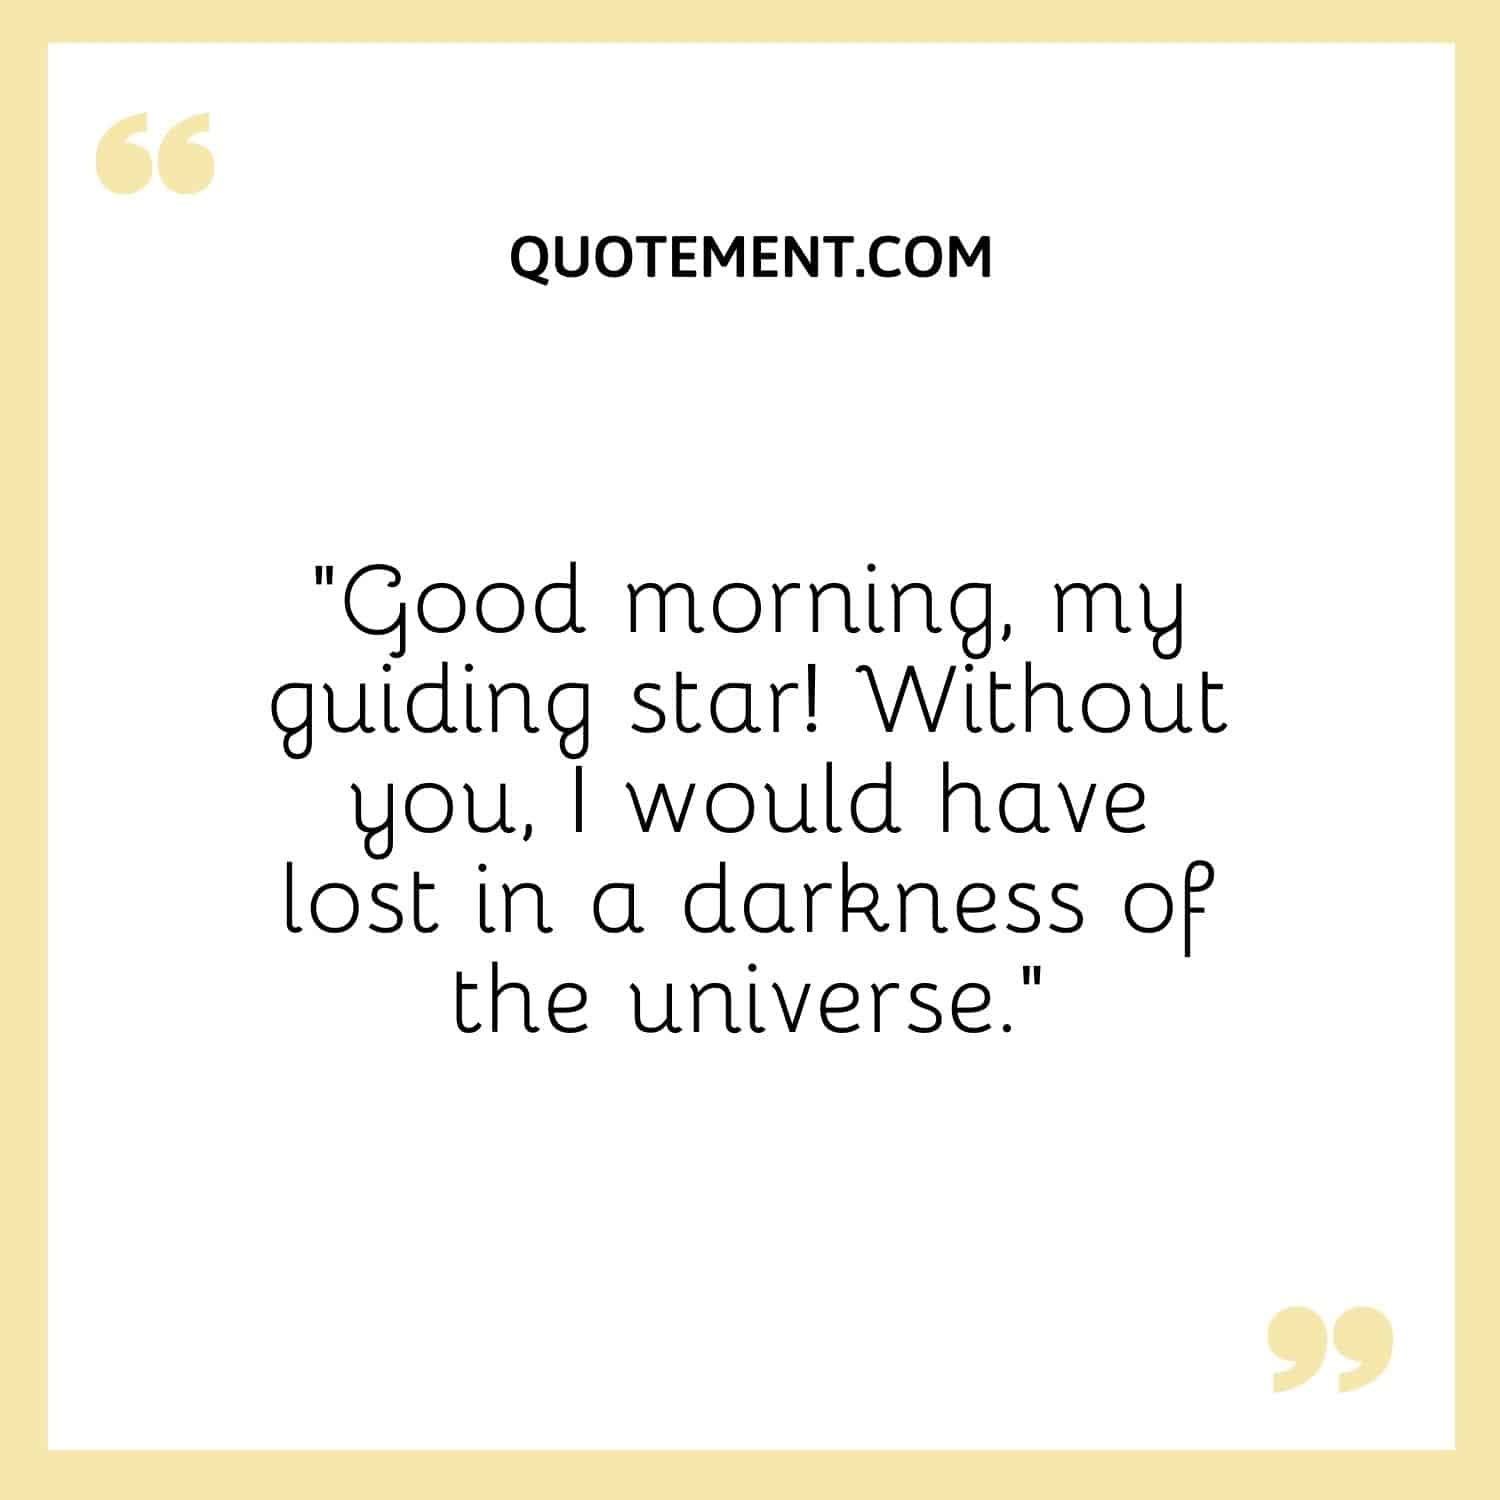 Good morning, my guiding star